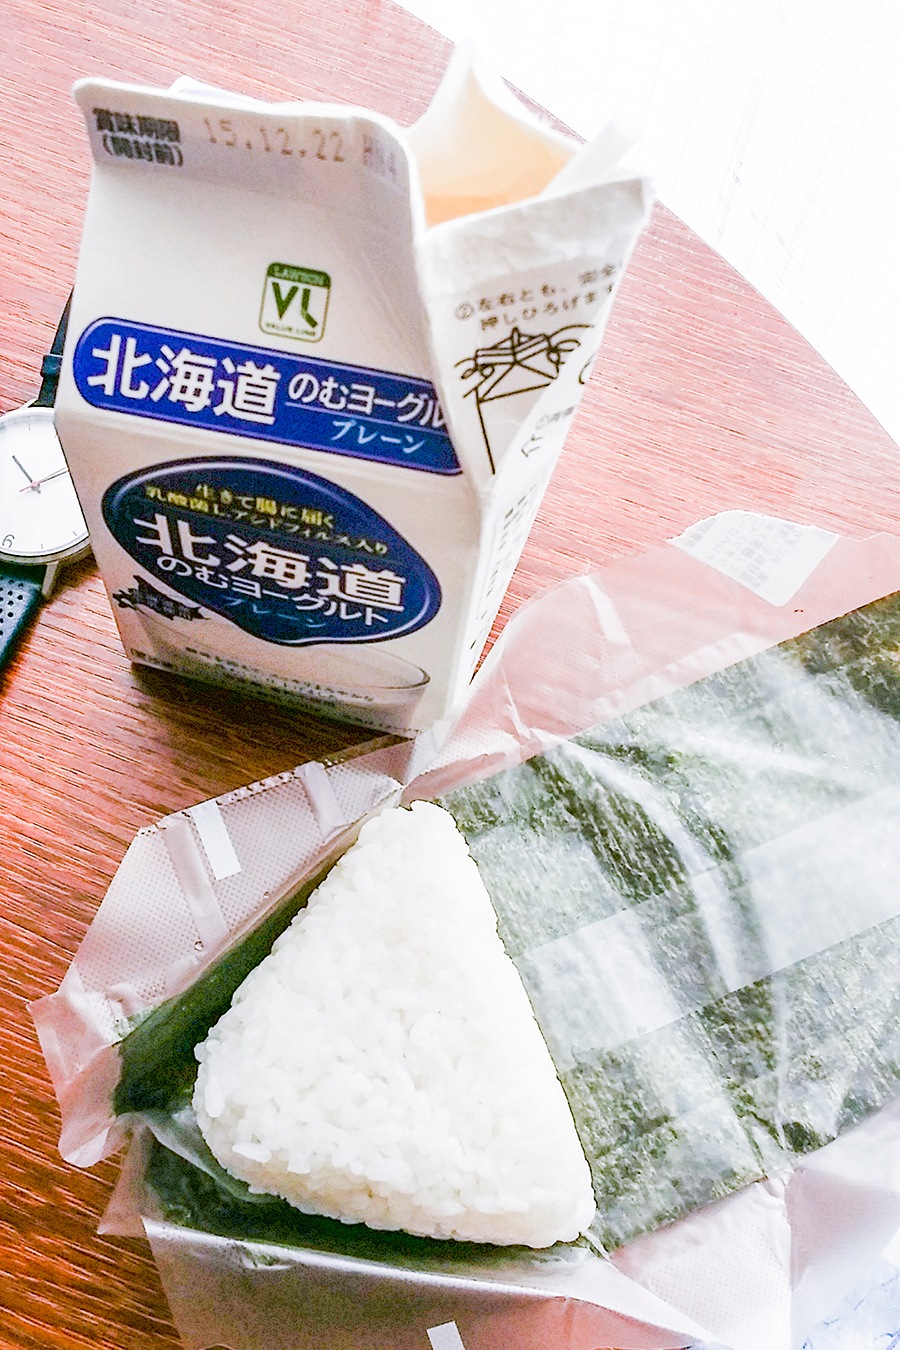 Hokkaido milk yoghurt and onigiri for breakfast in Tokyo, Japan.